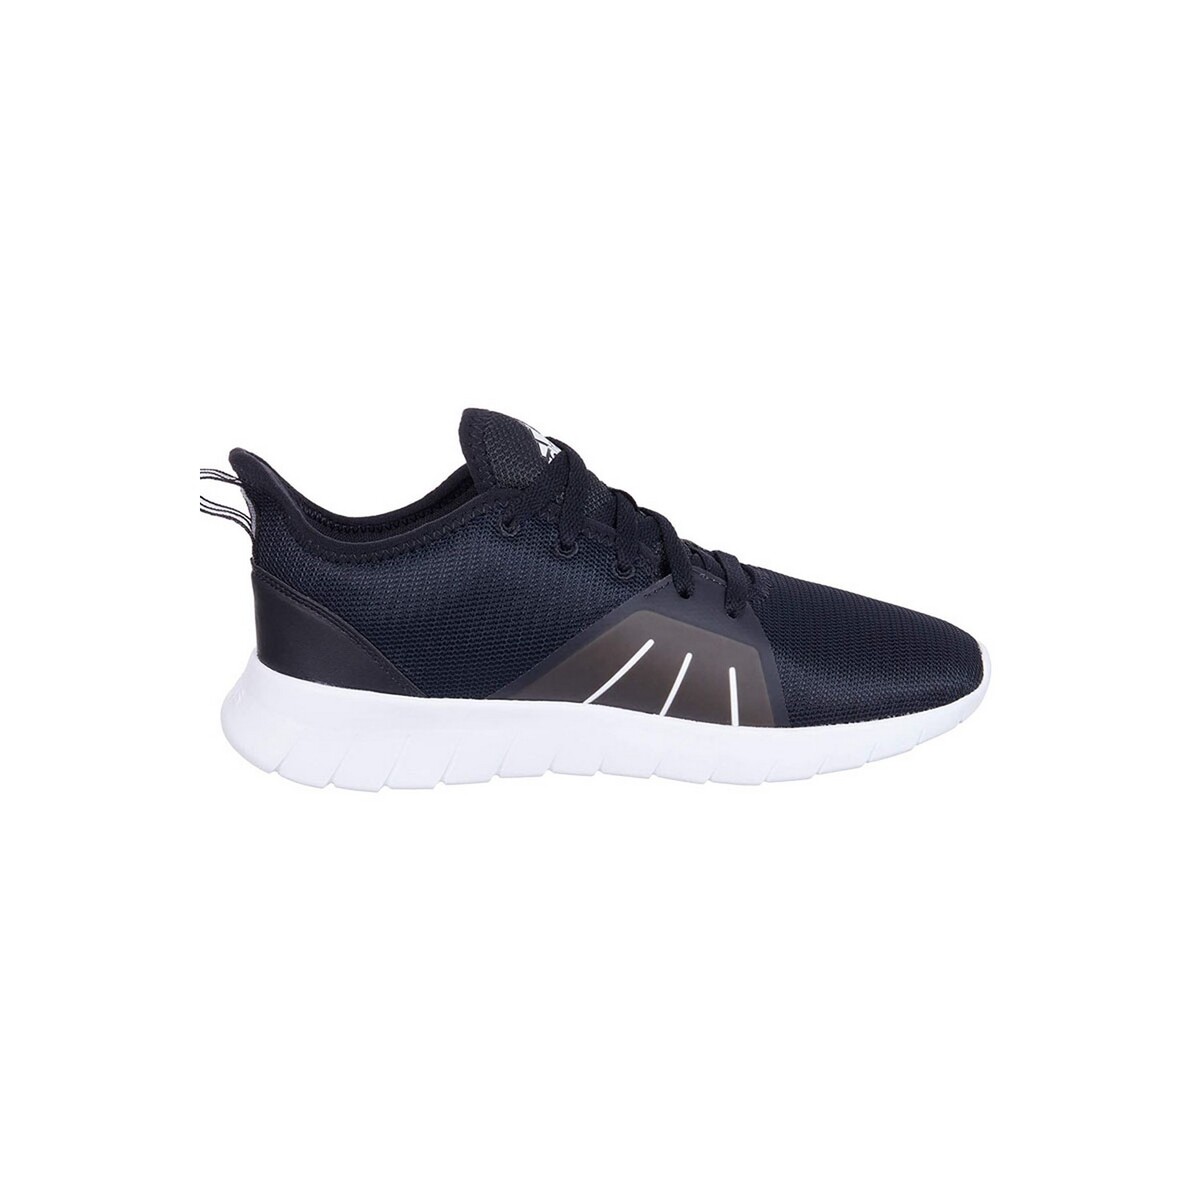 Adidas Mens Sports Shoes FW1676, 9